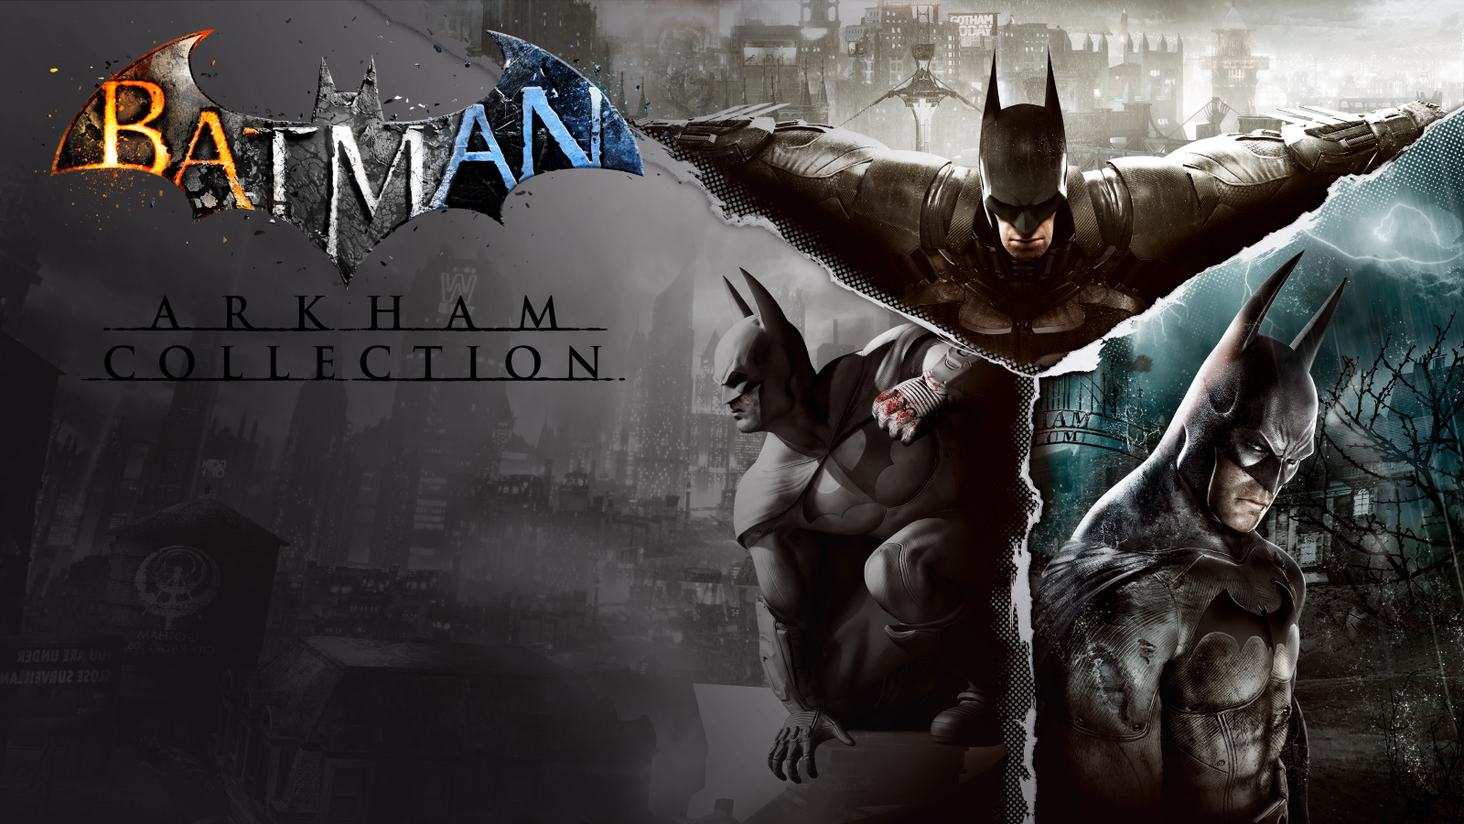 Jogo PS4 Hits Batman Arkham Knight – MediaMarkt